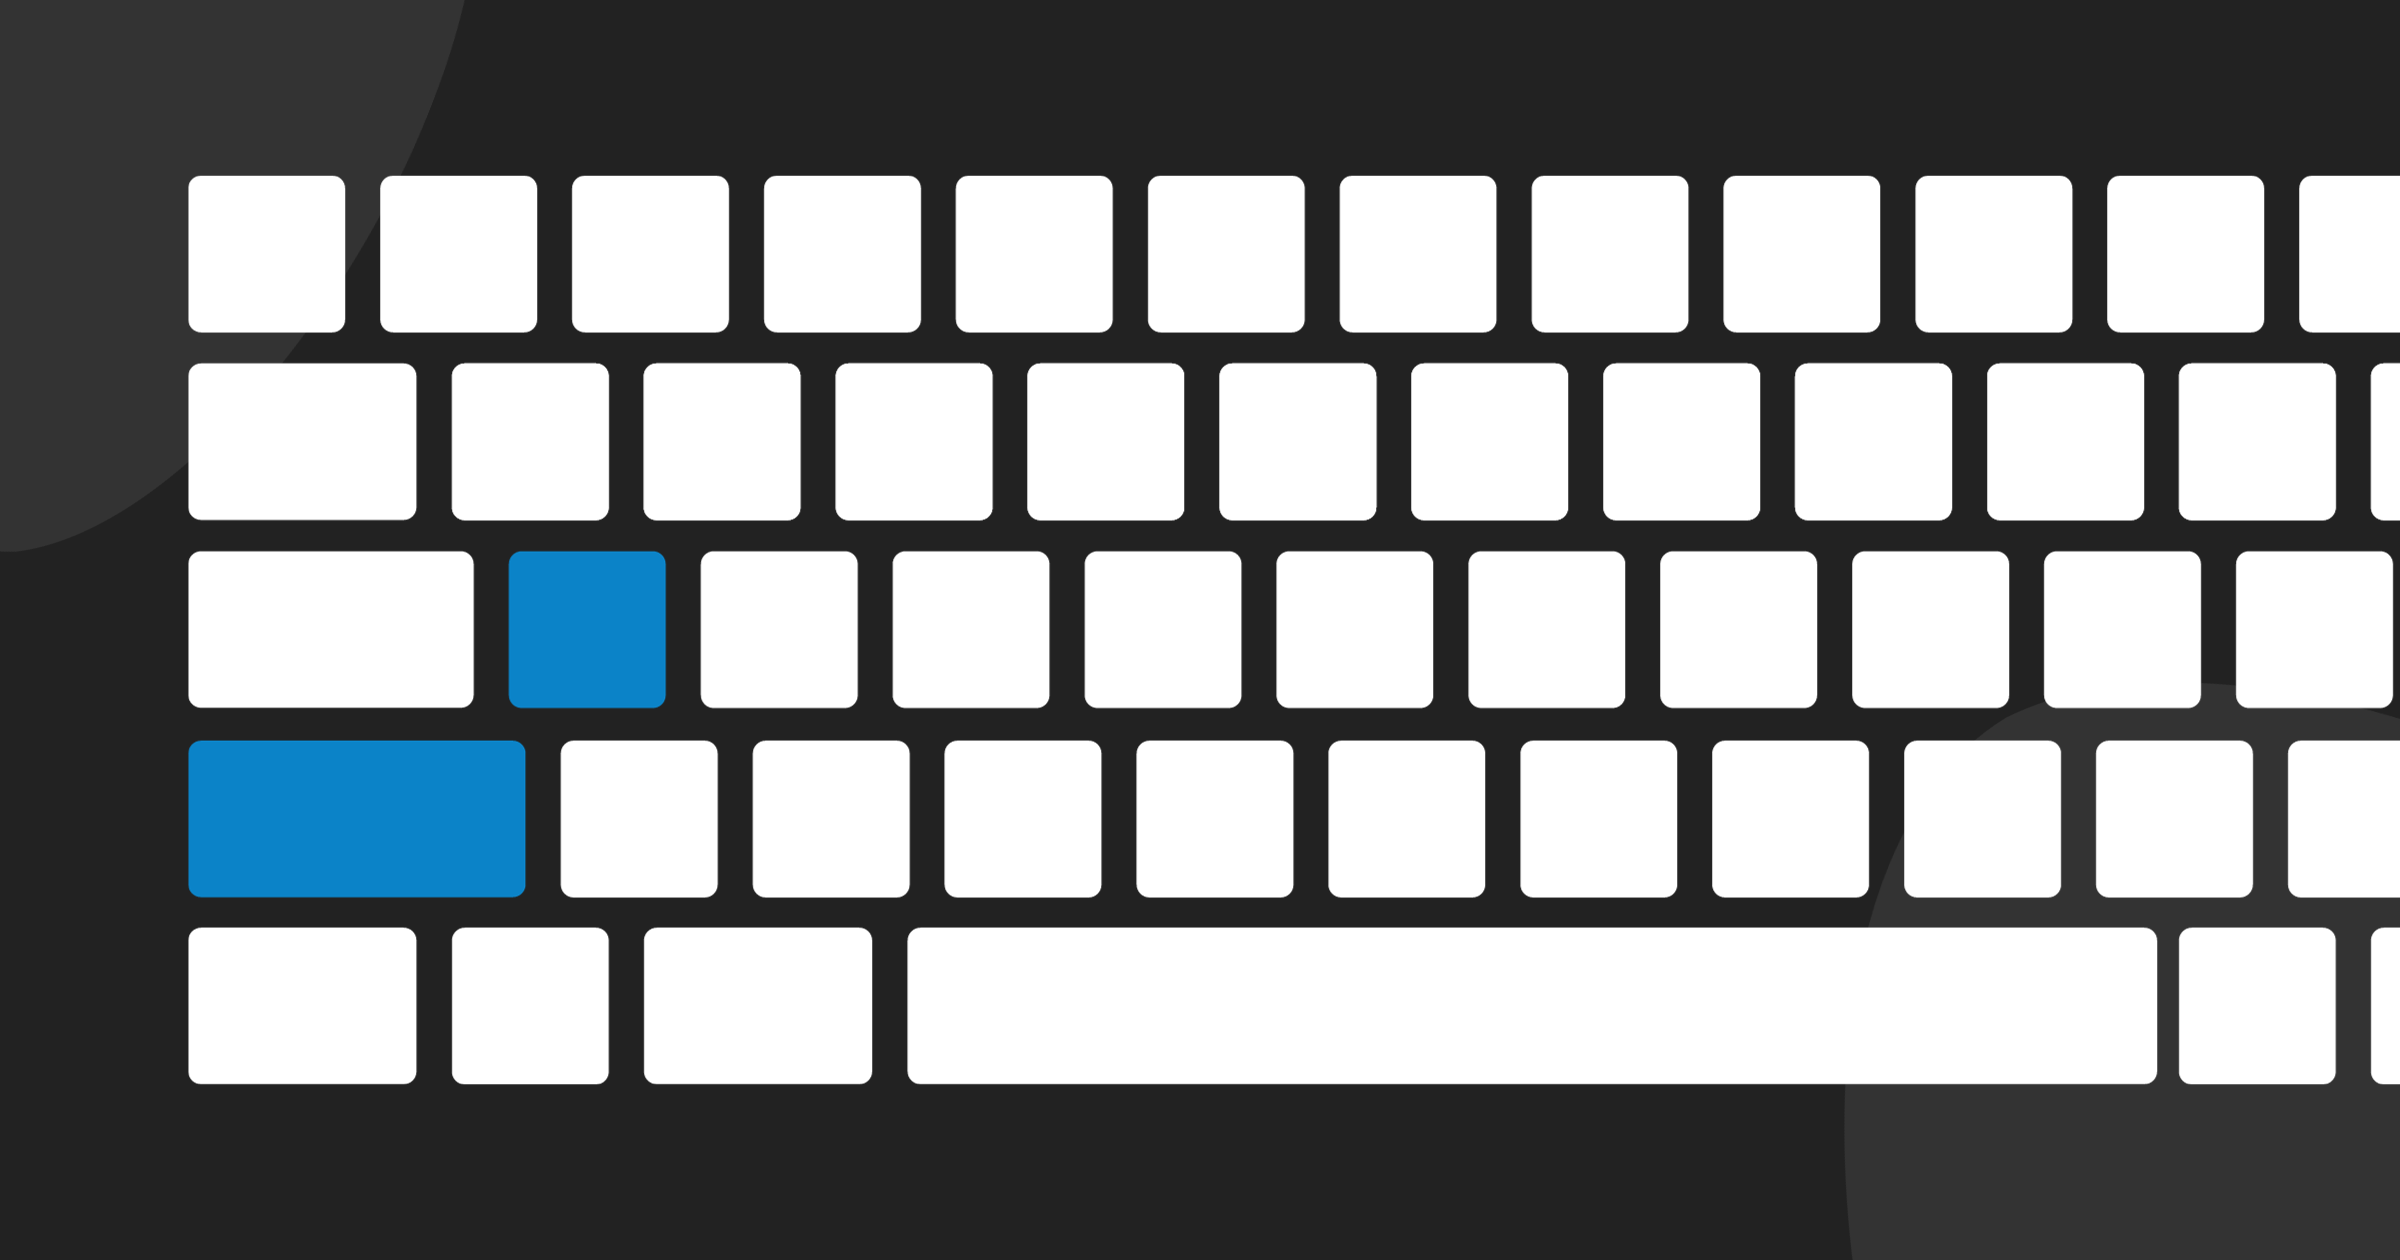 Keyboard shortcuts and many more customization options